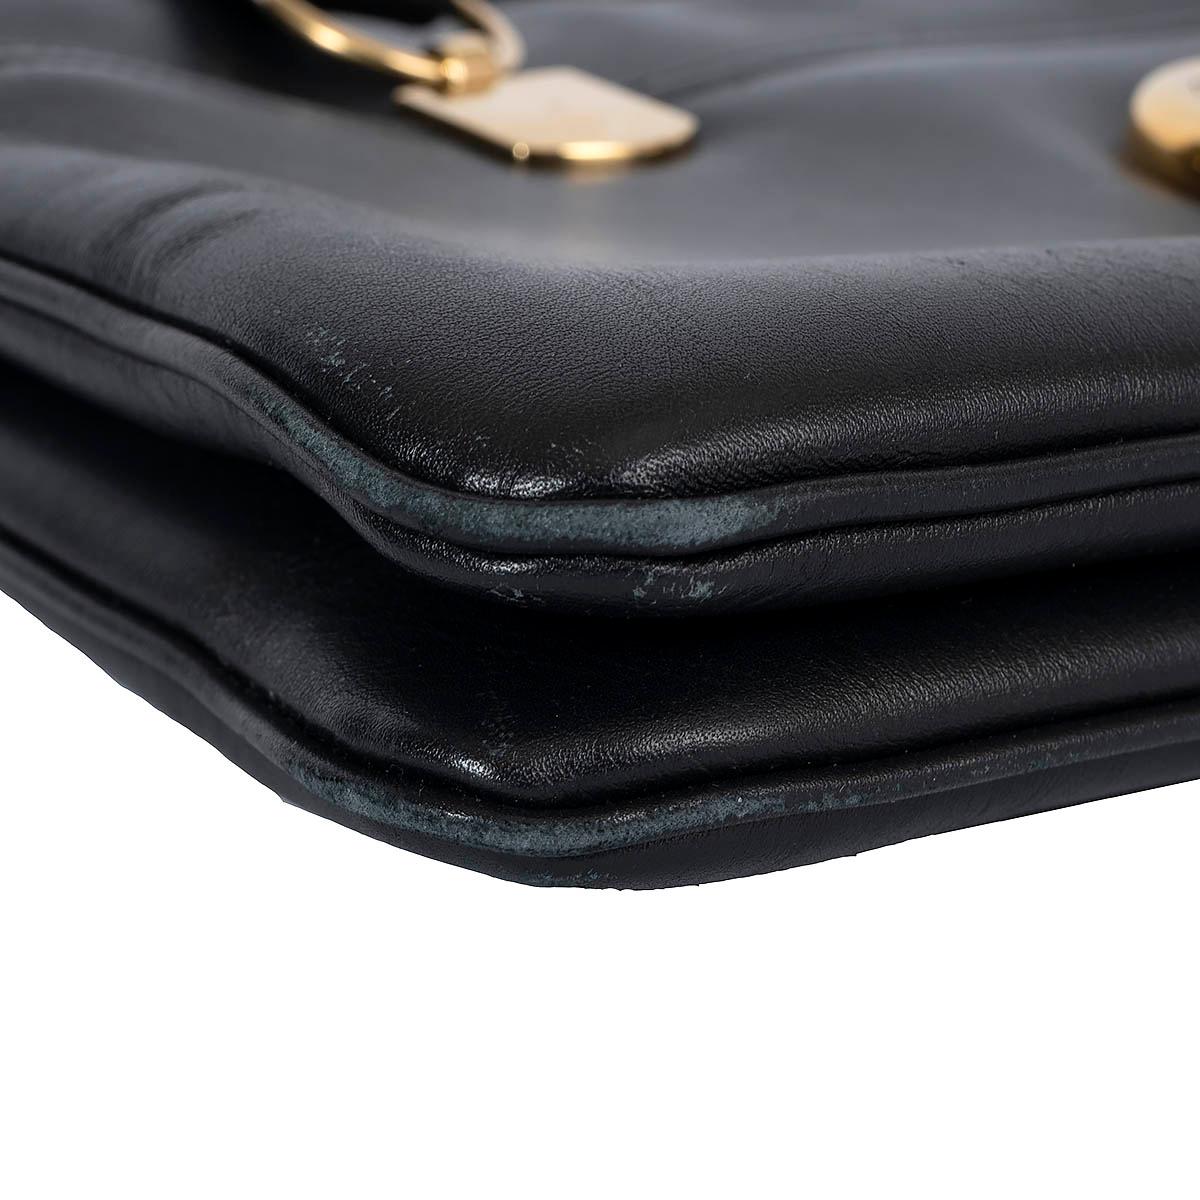 GUCCI black leather 2019 ARLI LARGE TOP HANDLE Bag For Sale 7